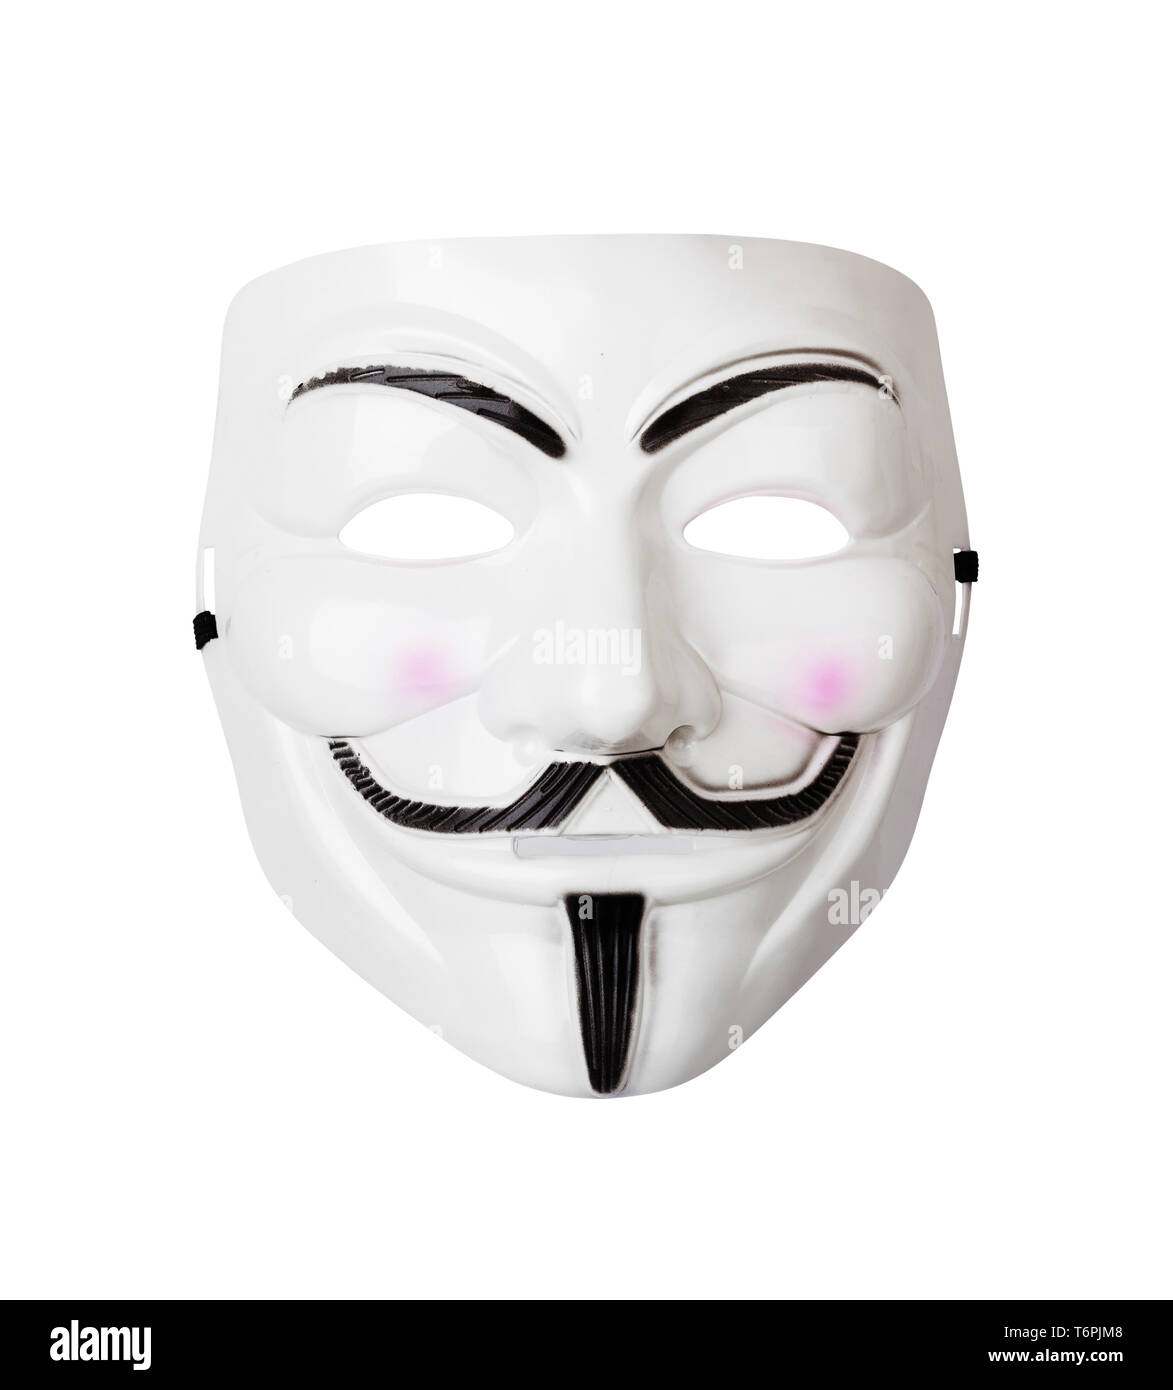 Computer hacker mask Stock Photo - Alamy